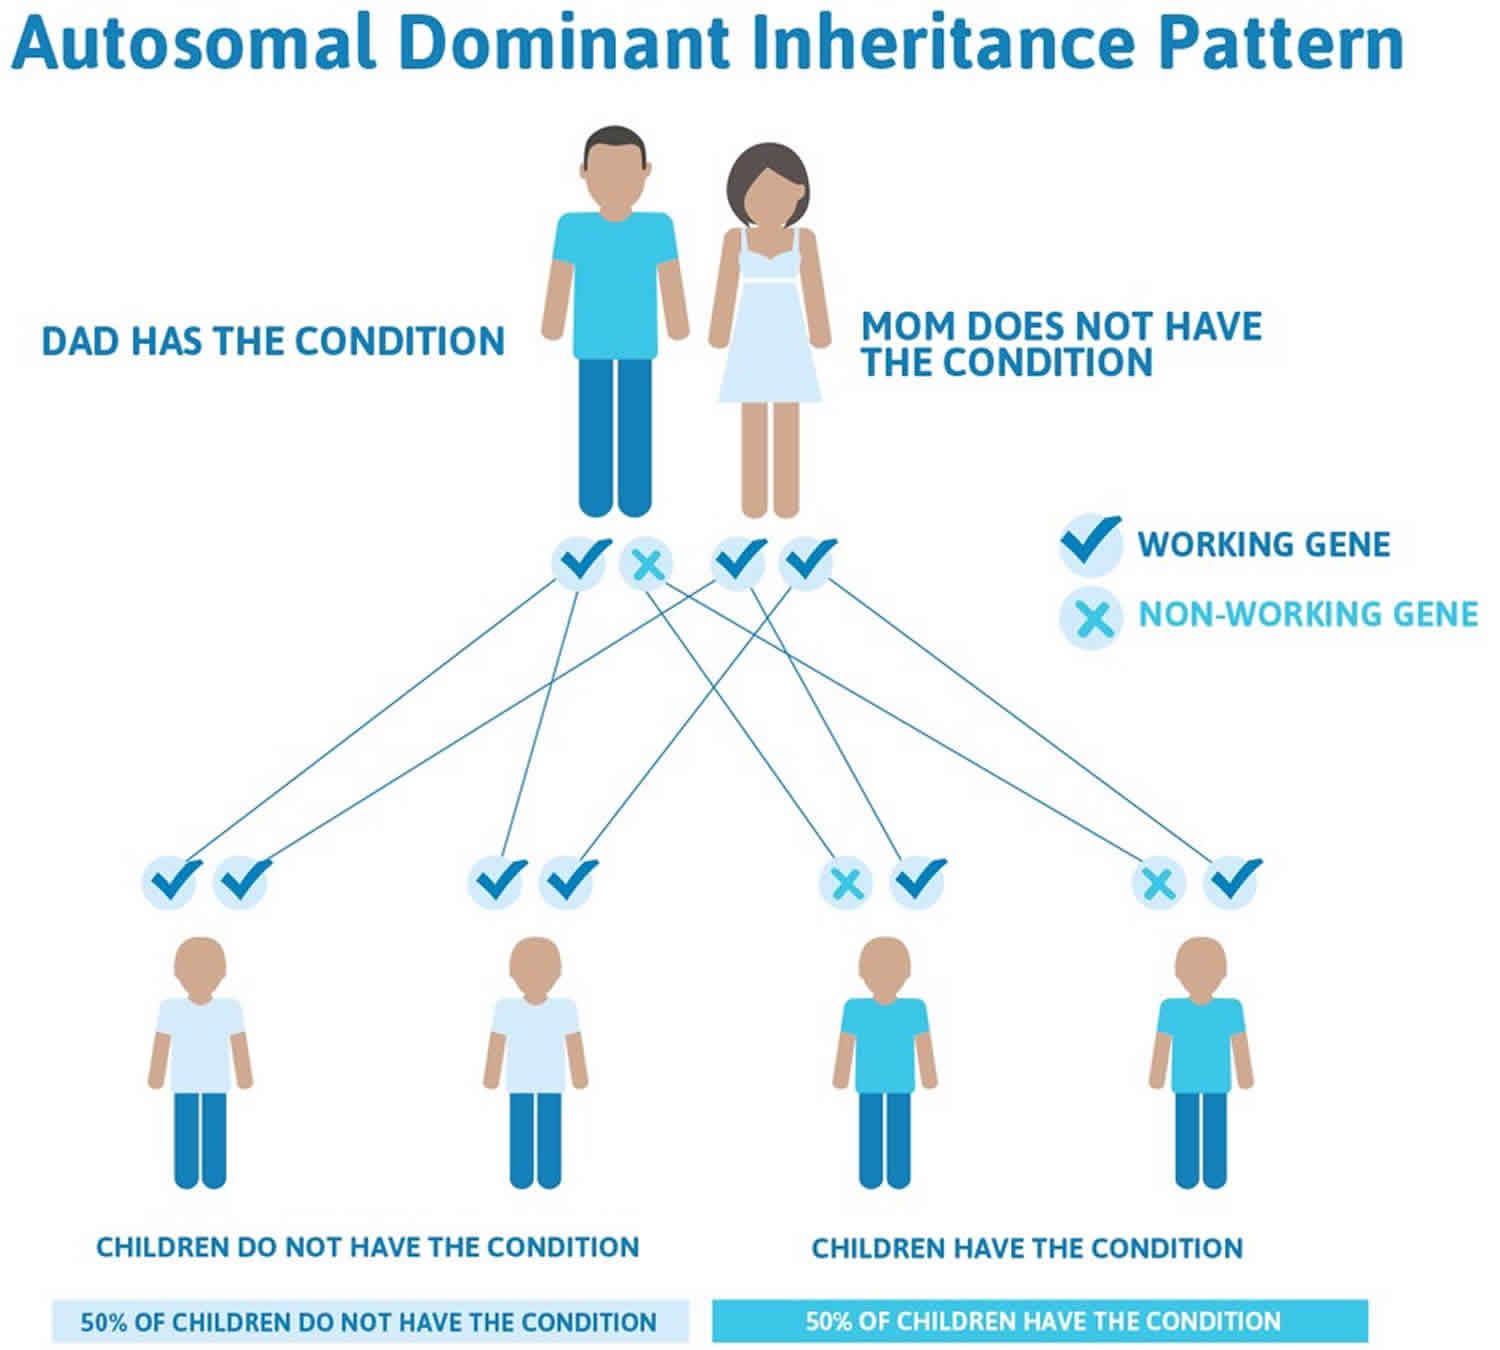 Autosomal dominant inheritance pattern